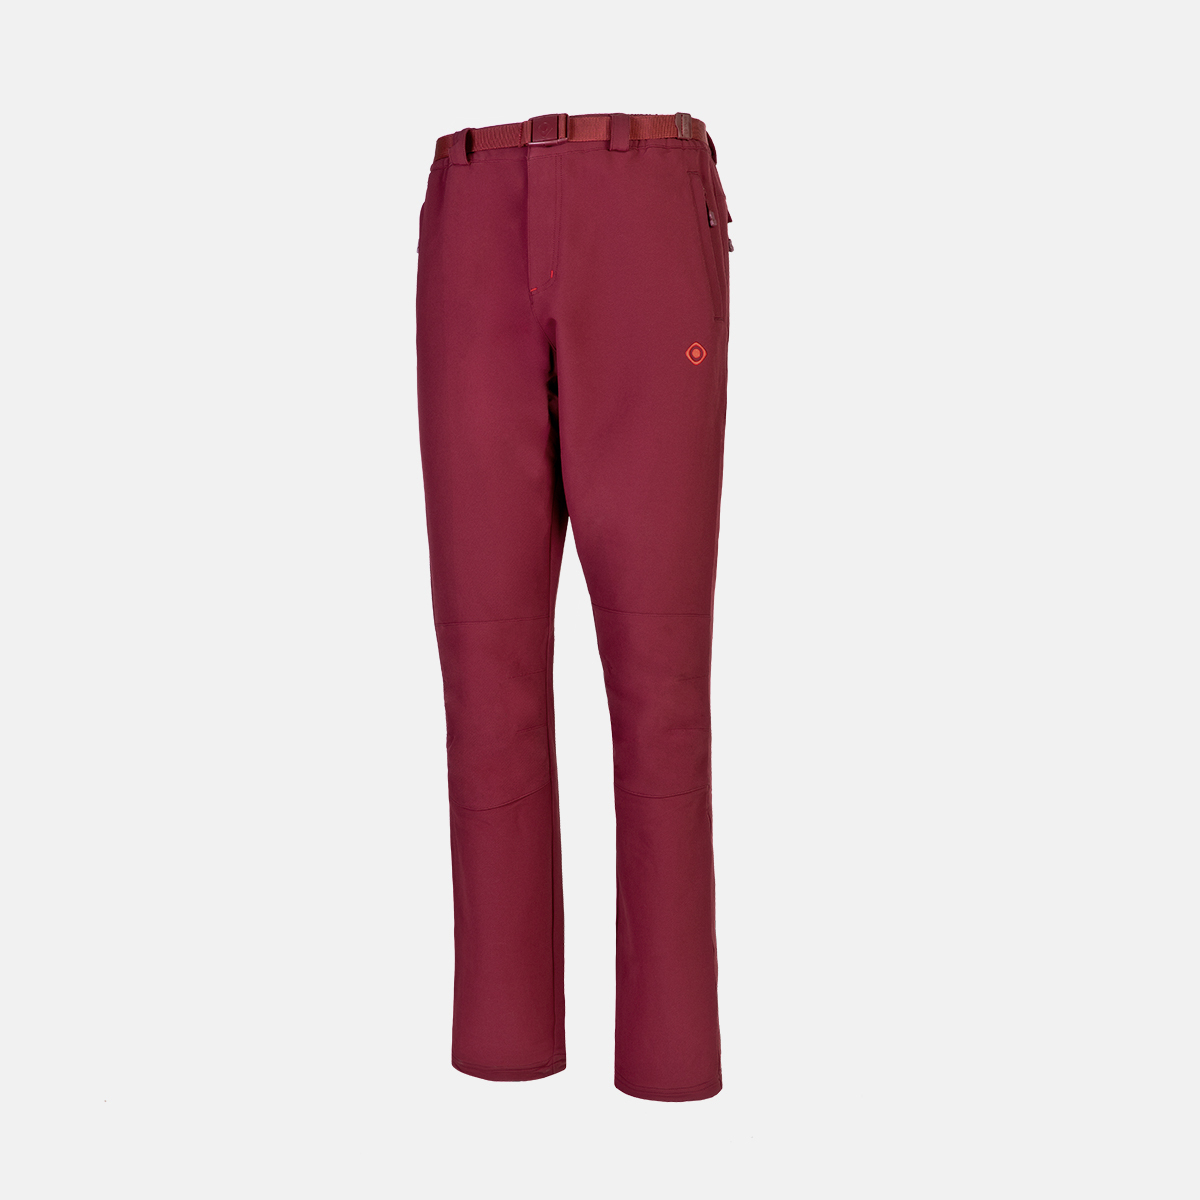  Seasonal man red mountain trousers Chamonix M CO